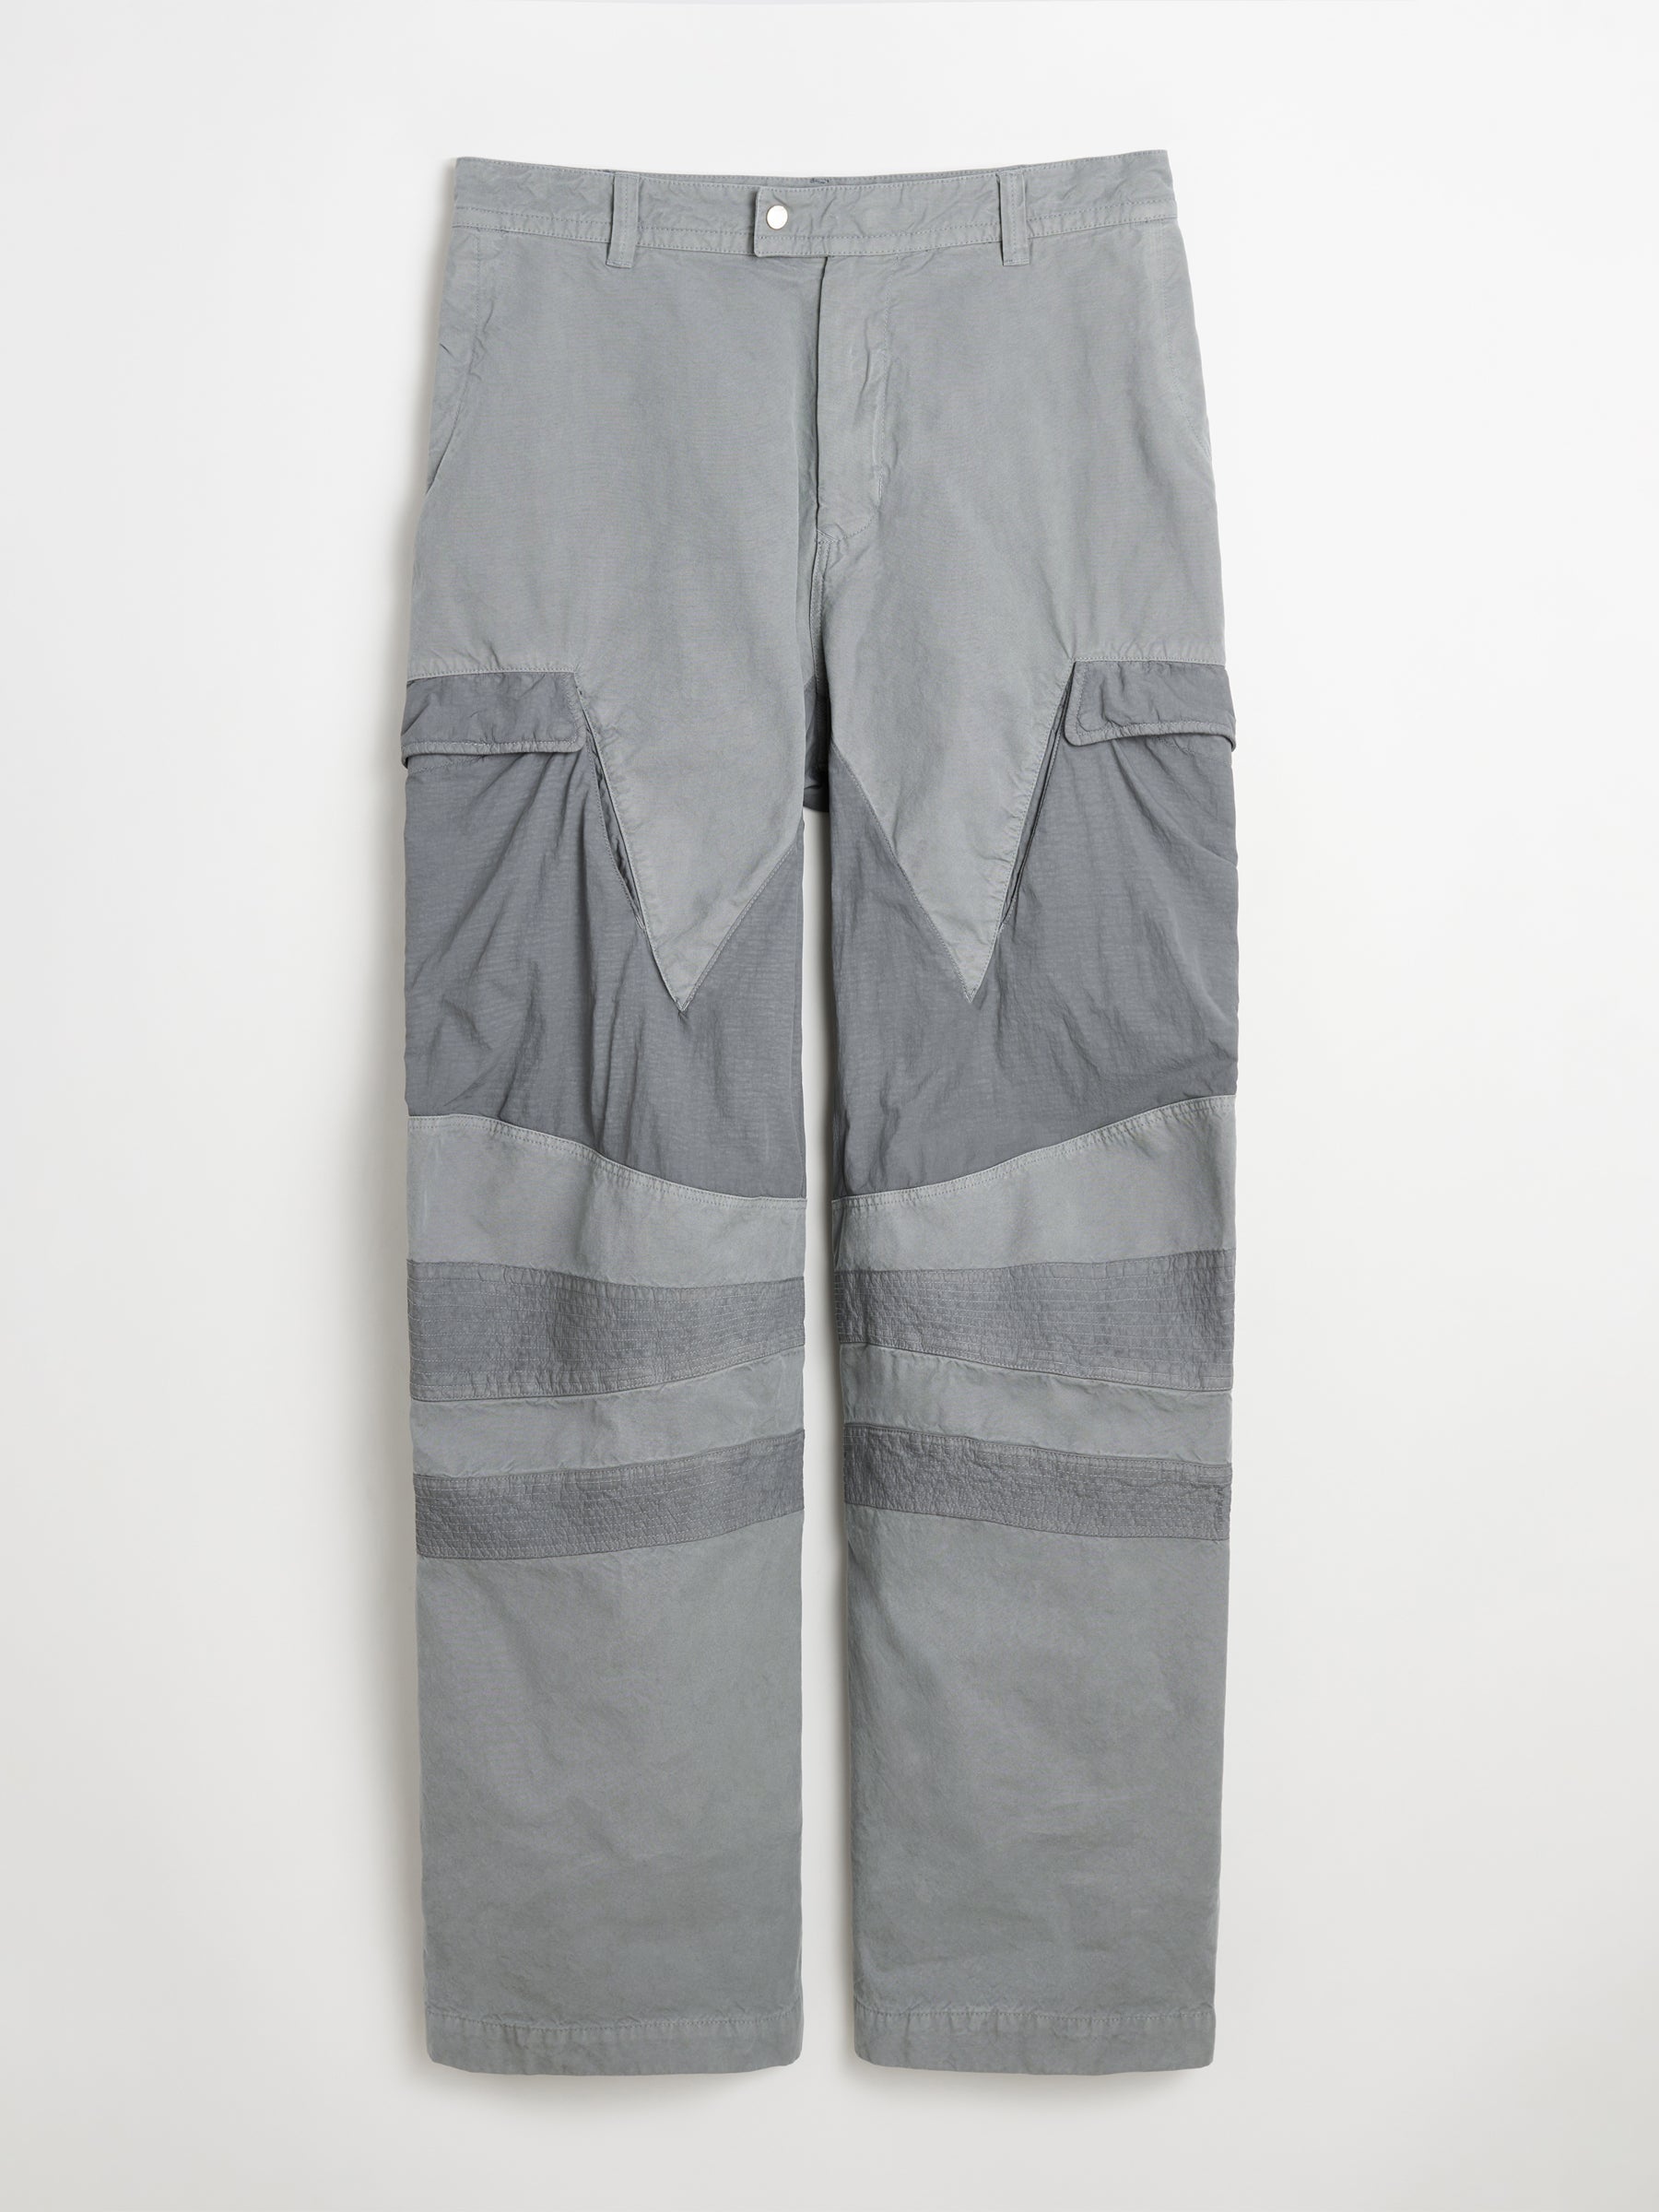 Kiko Kostadinov x C.P. Company Cargo Pants Steel Grey